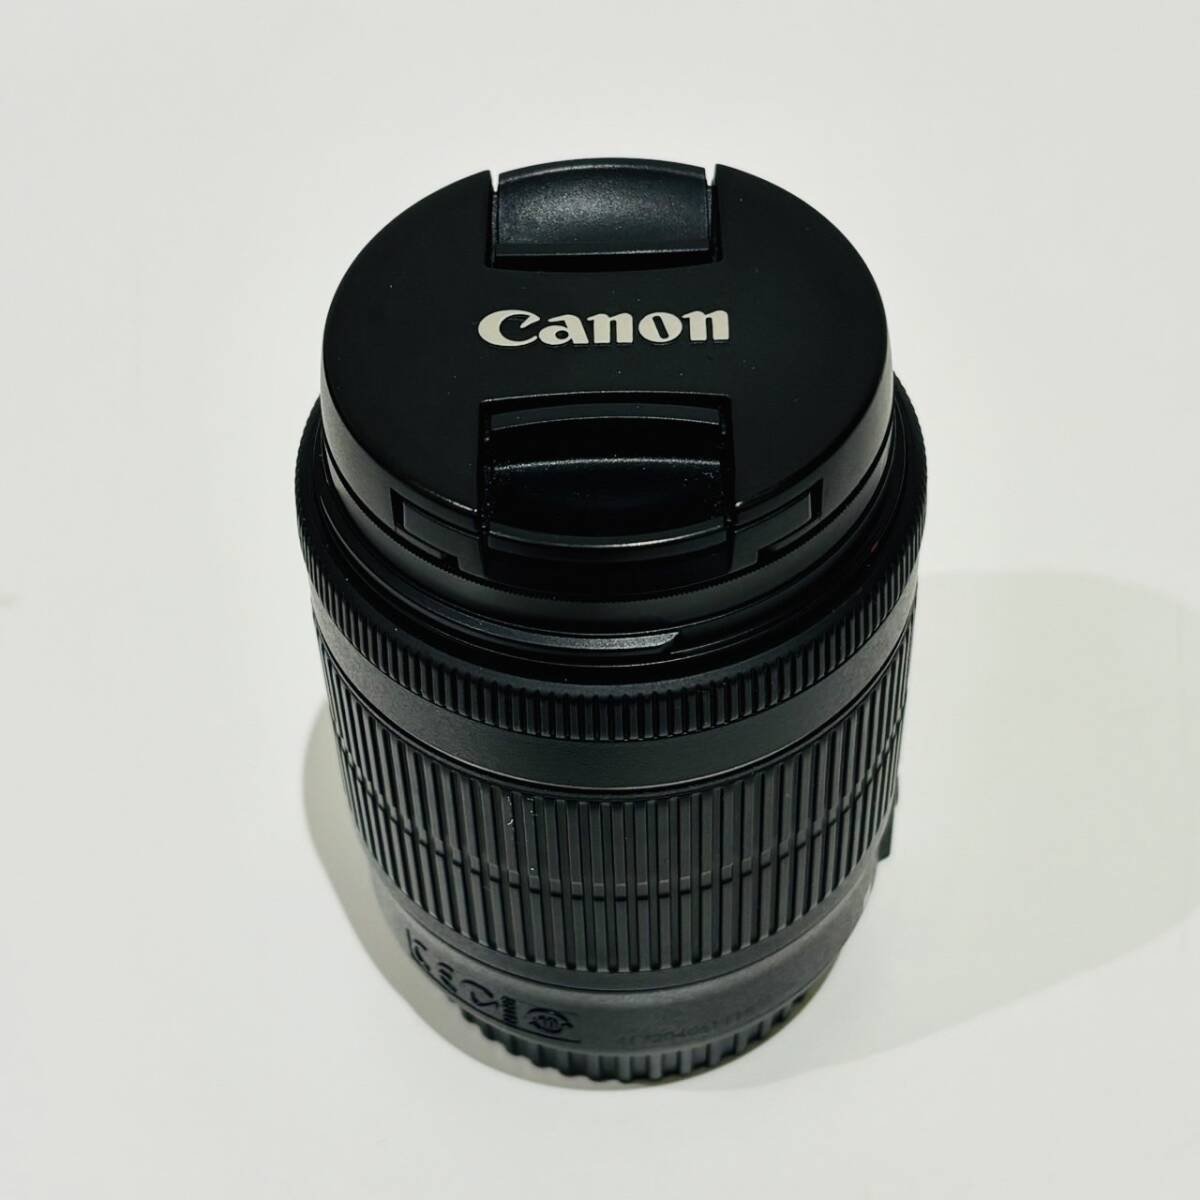 [AMT-11229]Canon Canon DOUBLE ZOOM KIT EOS Kiss X7 цифровой однообъективный зеркальный камера EF-S18-55mm EF-S55-250mm принадлежности иметь электризация проверка settled 